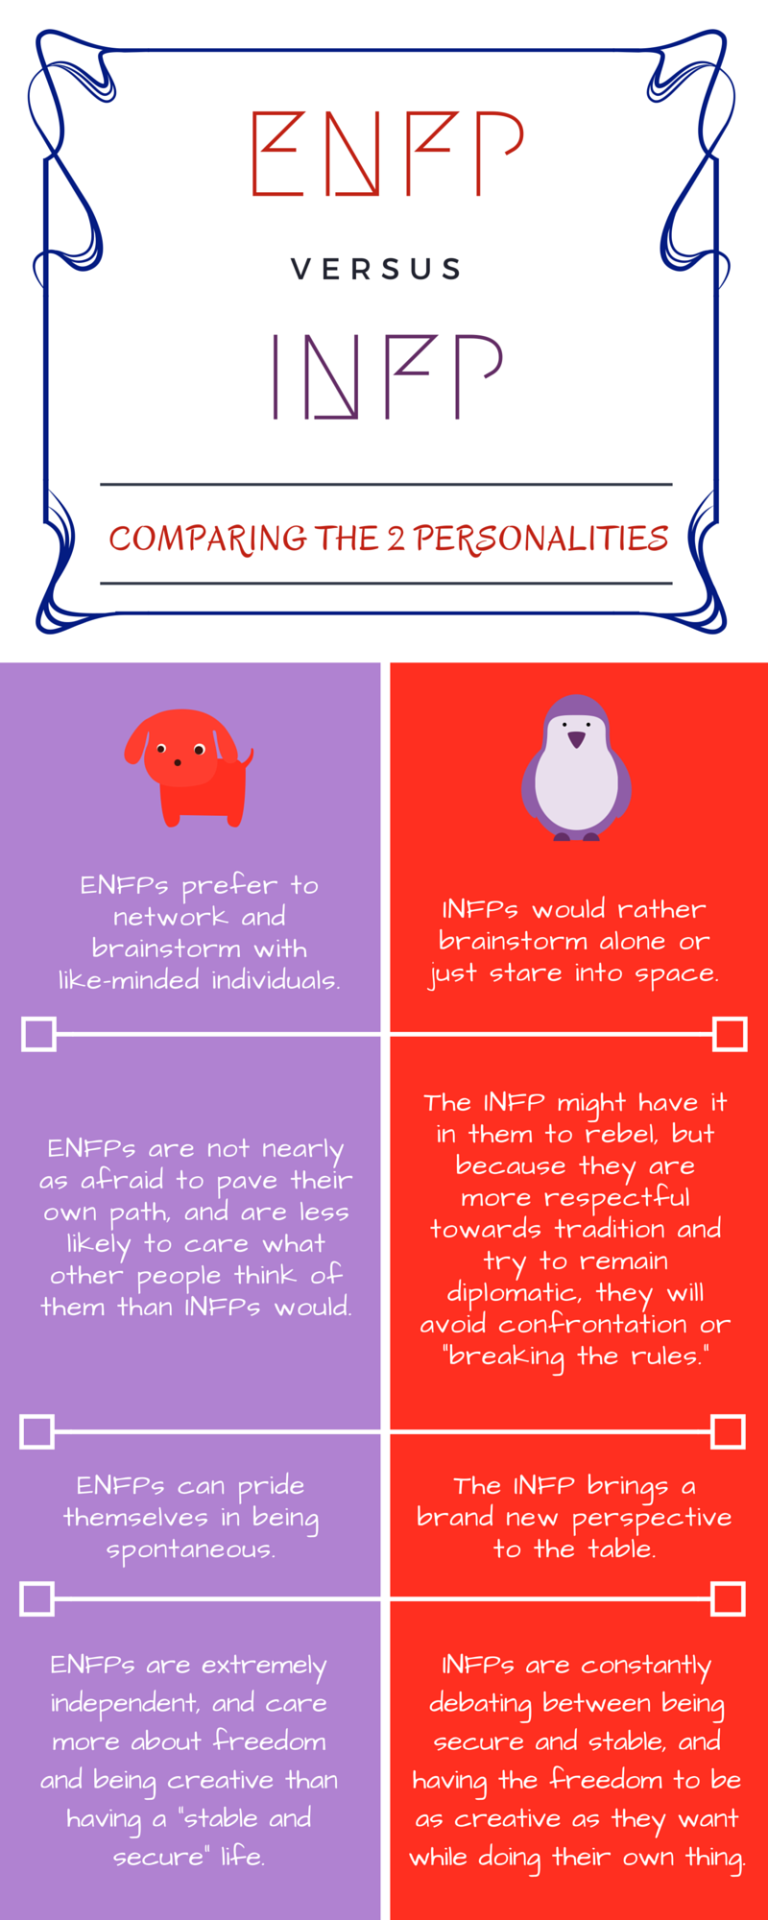 here's an ENFJ blog – ENFP vs. INFP